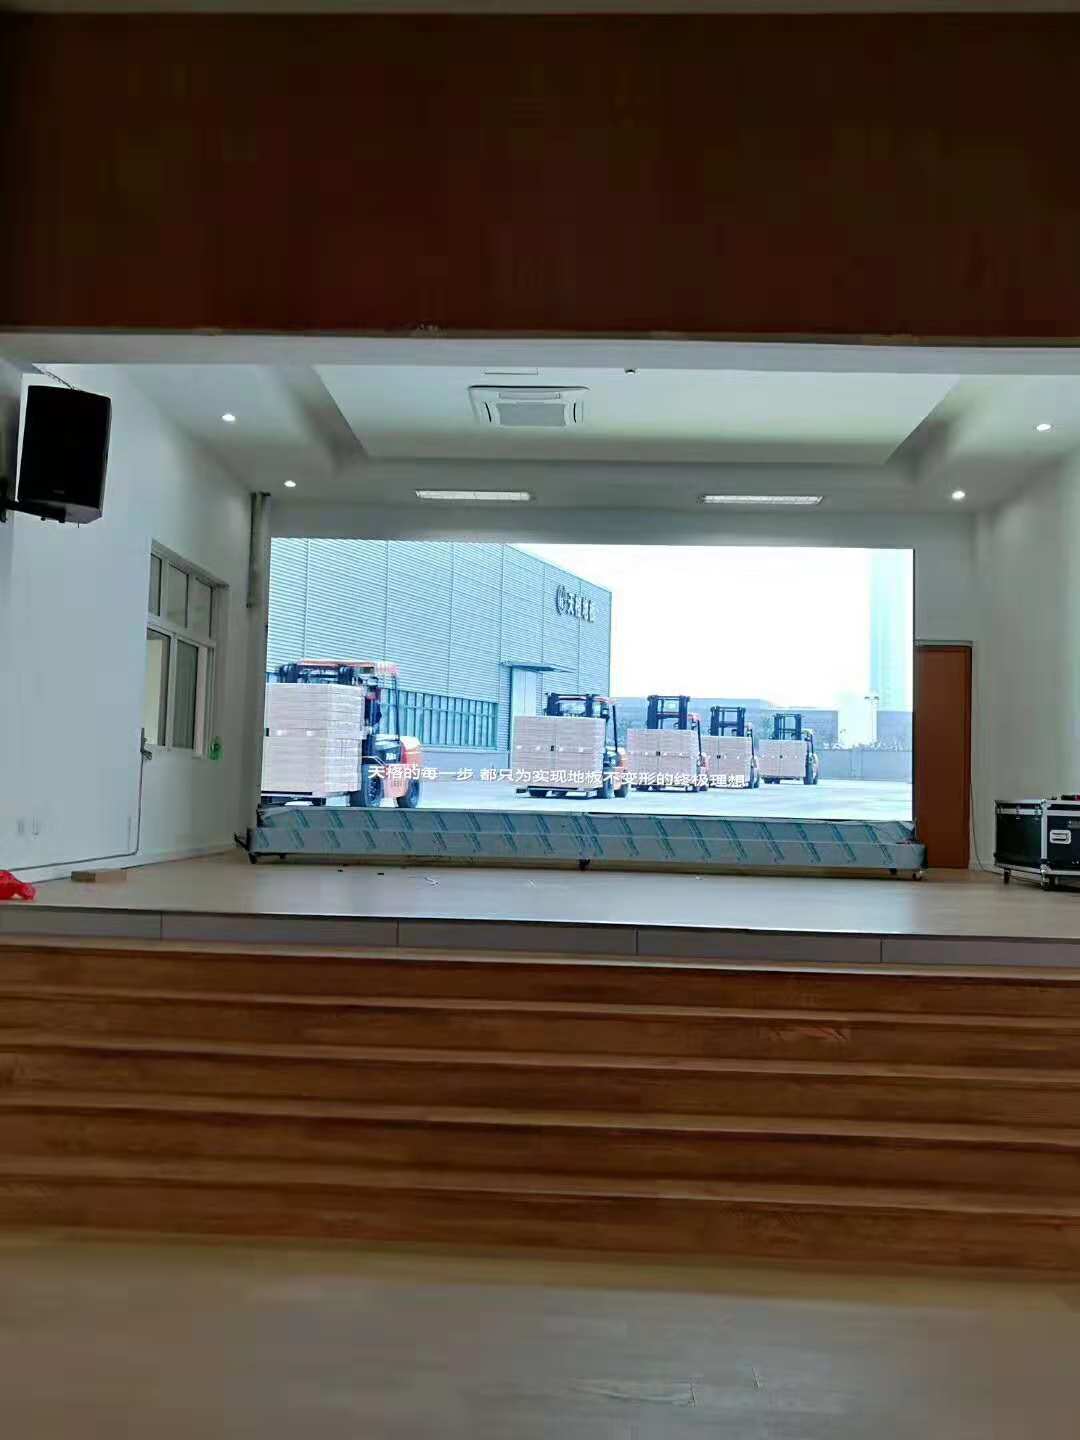 Zhejiang flooring company indoor P2.5 rental display screen installation is completed